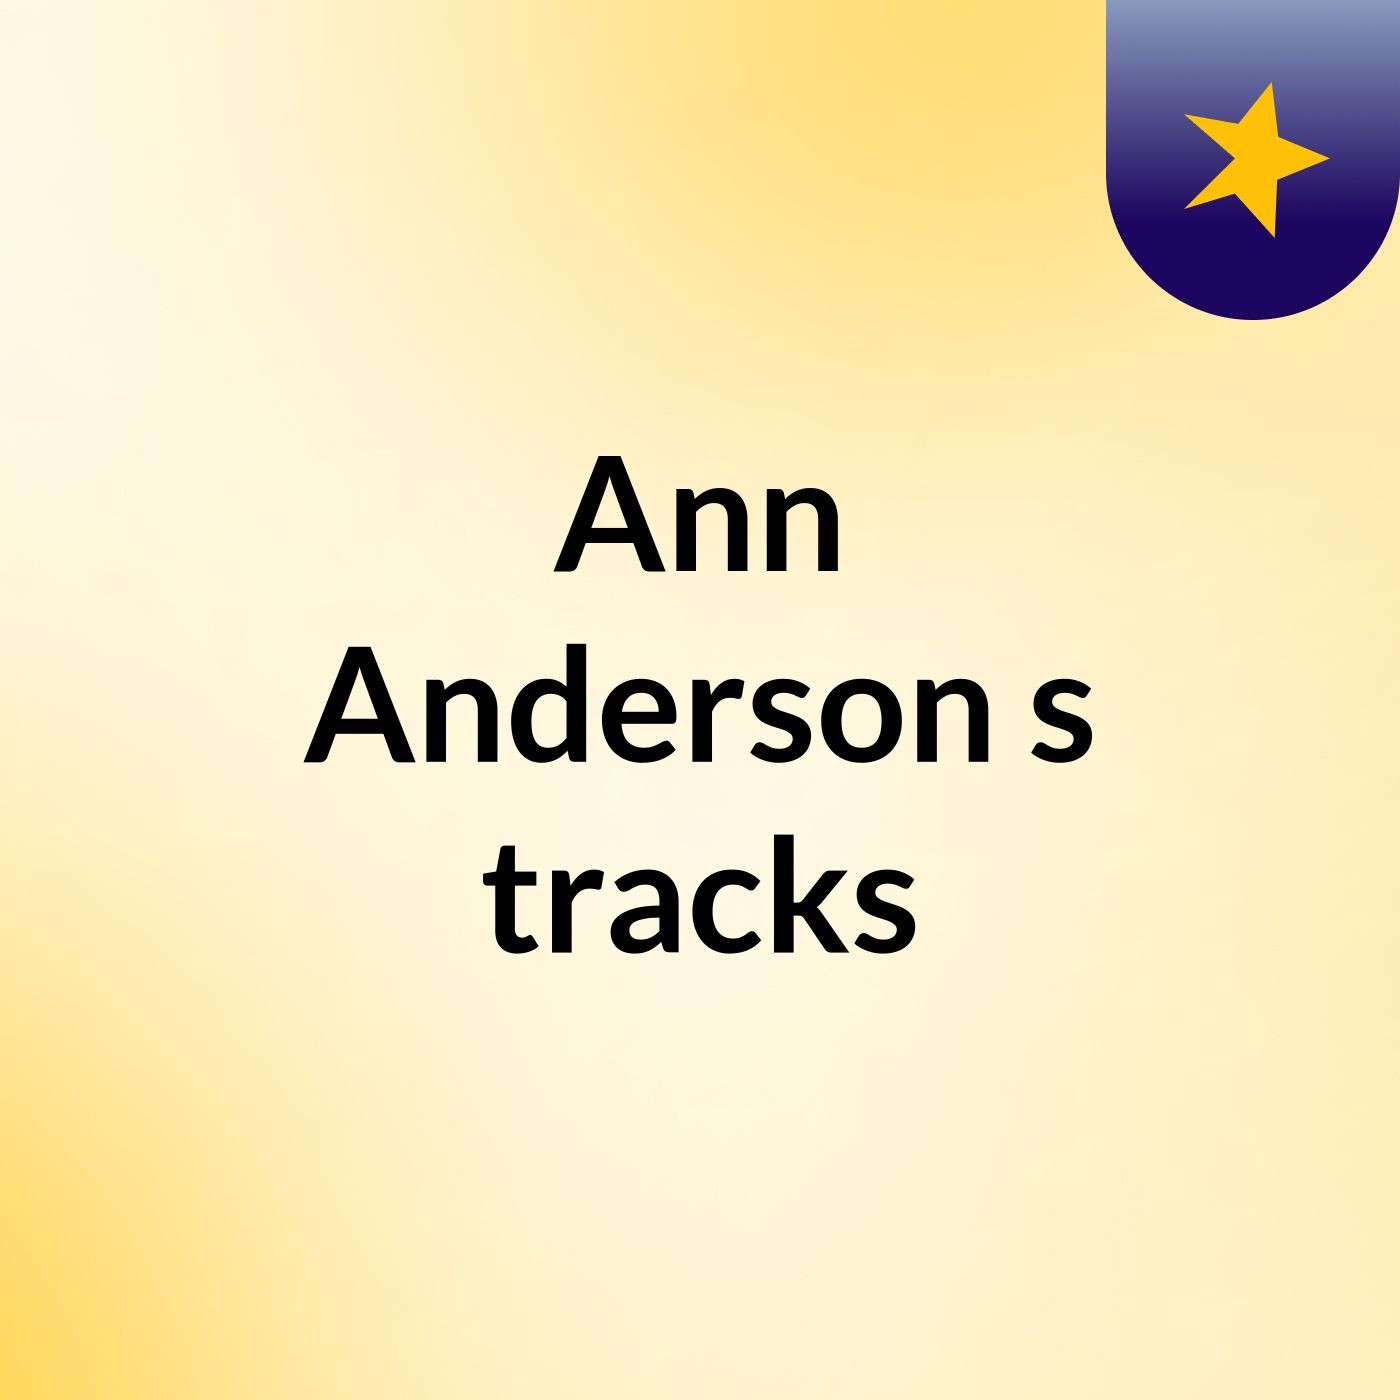 Ann Anderson's tracks